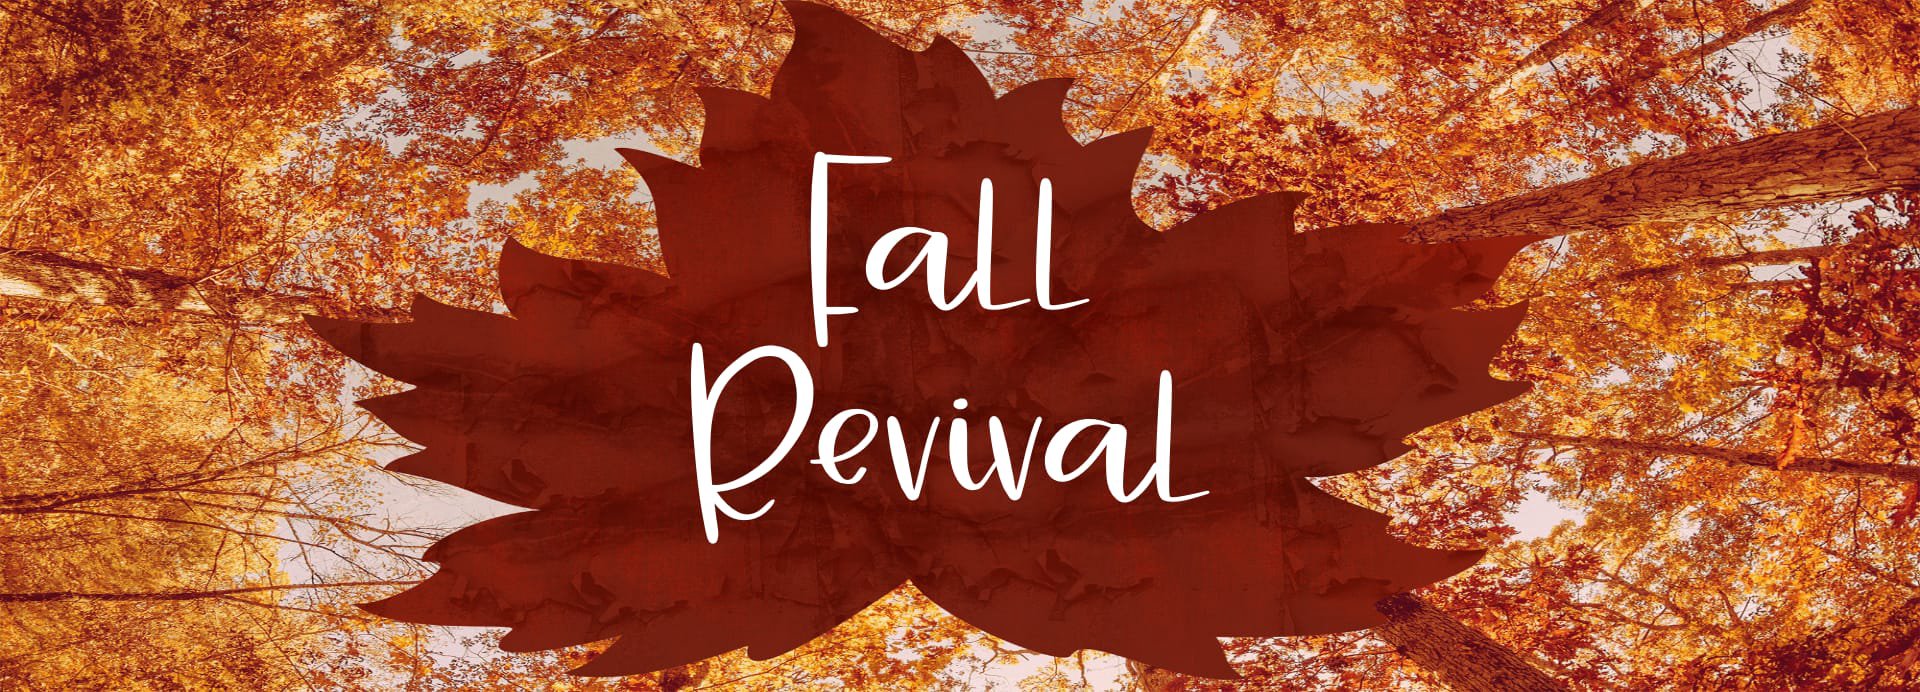 Fall Revival - Harvest Baptist Temple